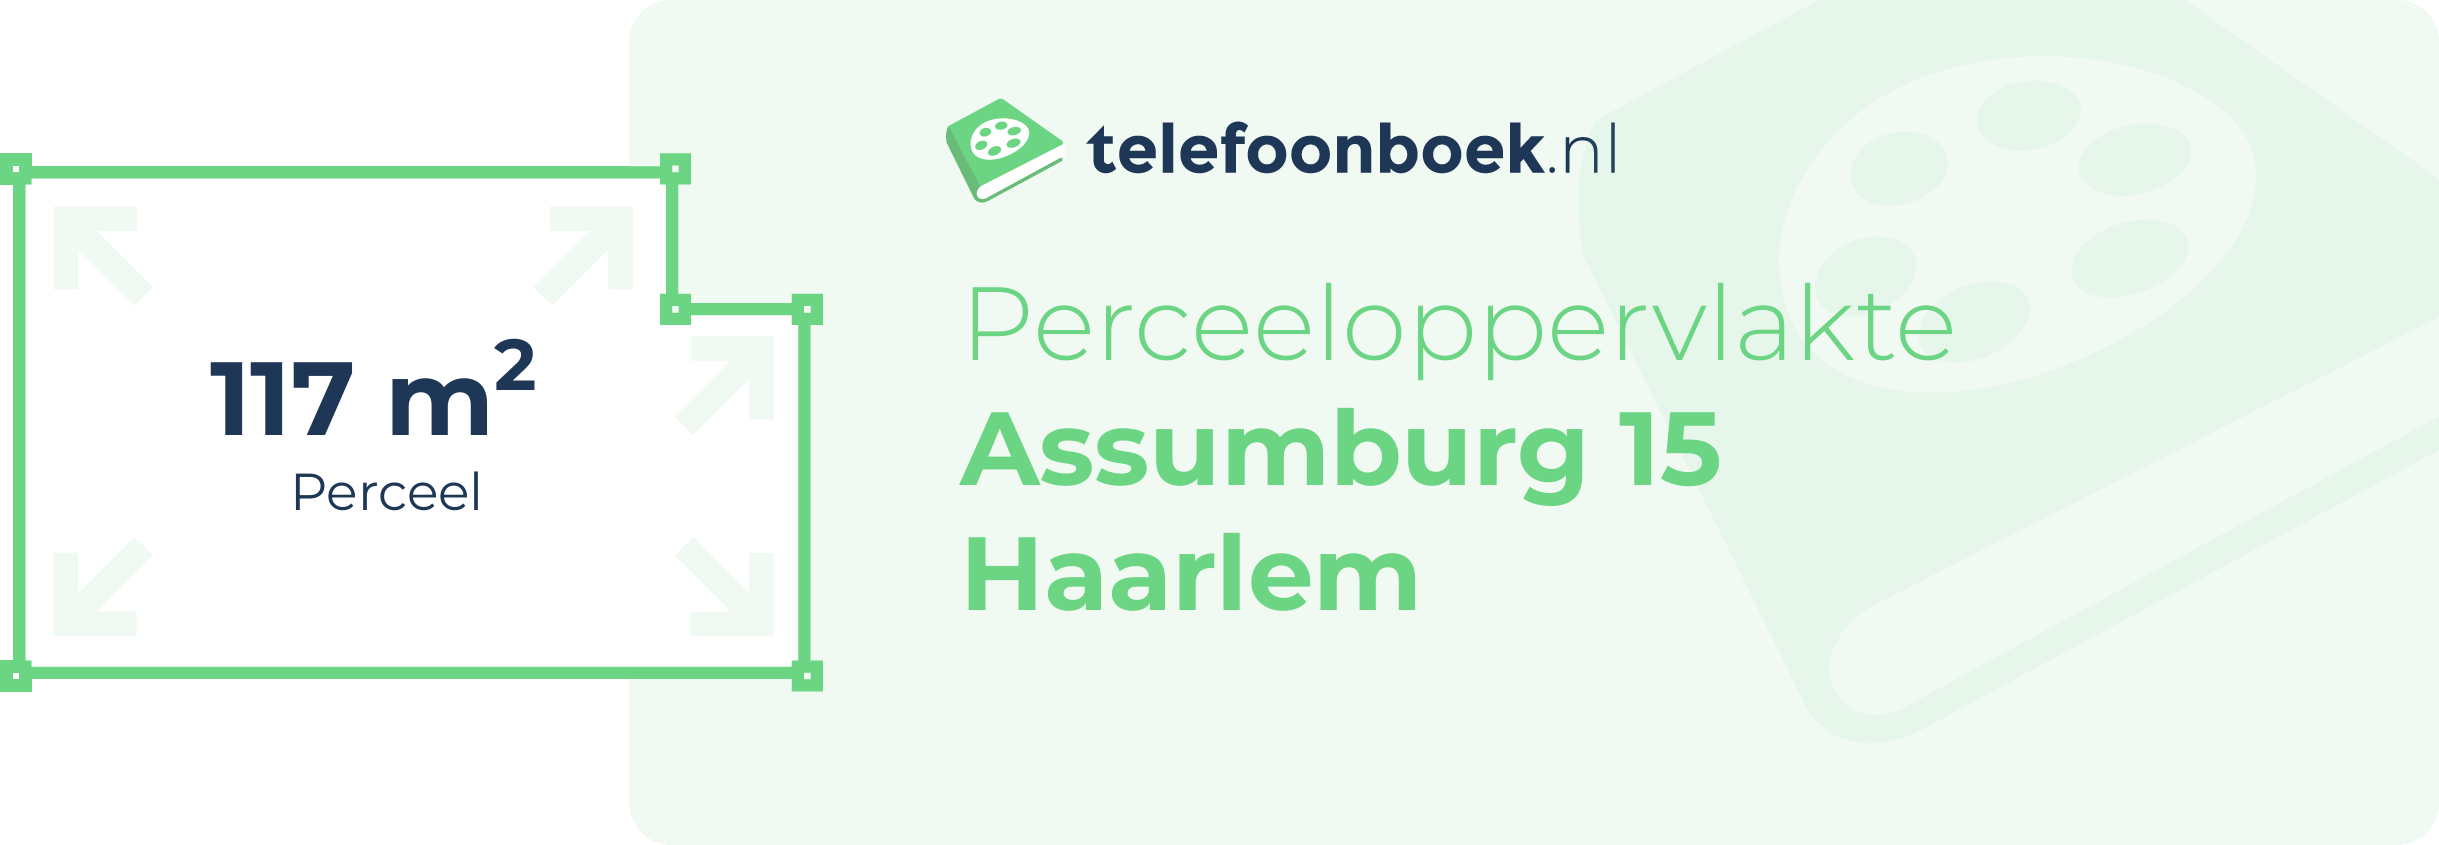 Perceeloppervlakte Assumburg 15 Haarlem